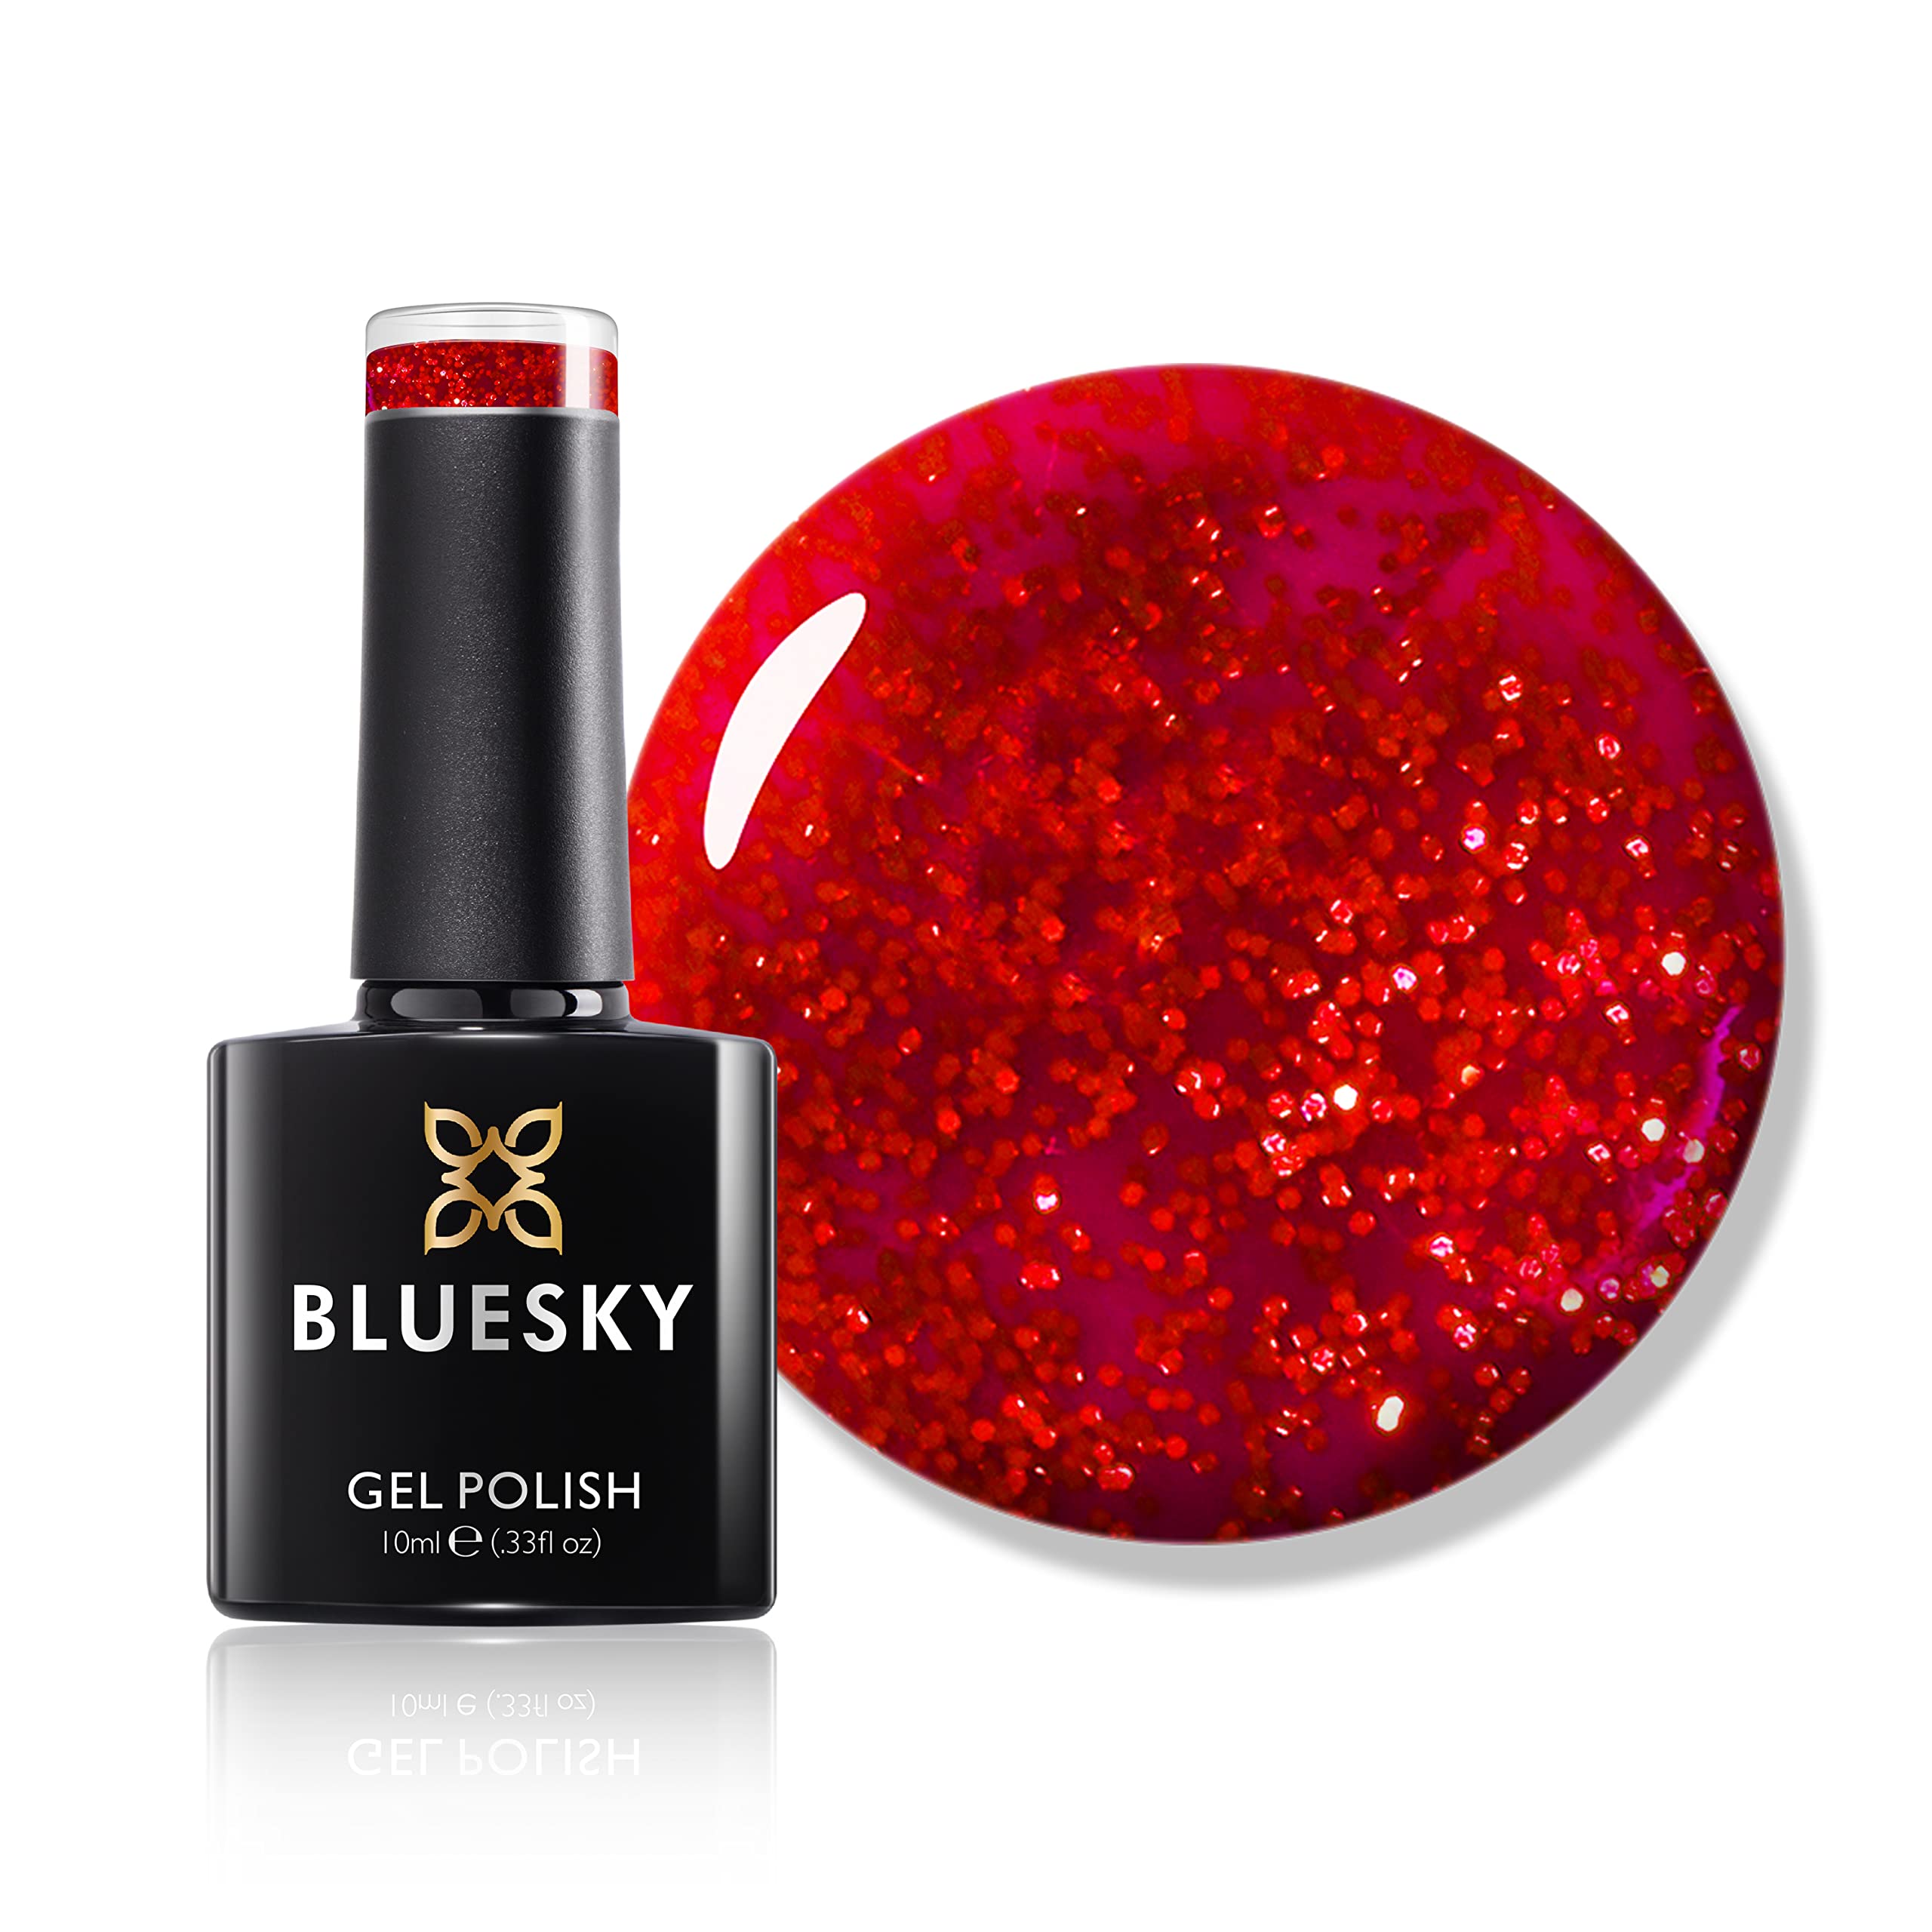 Bluesky Gel Nail Polish, Santa Red Dream Bsh028, Glitter, Long Lasting, Chip Resistant, 10 ml (Requires Drying Under UV LED Lamp)